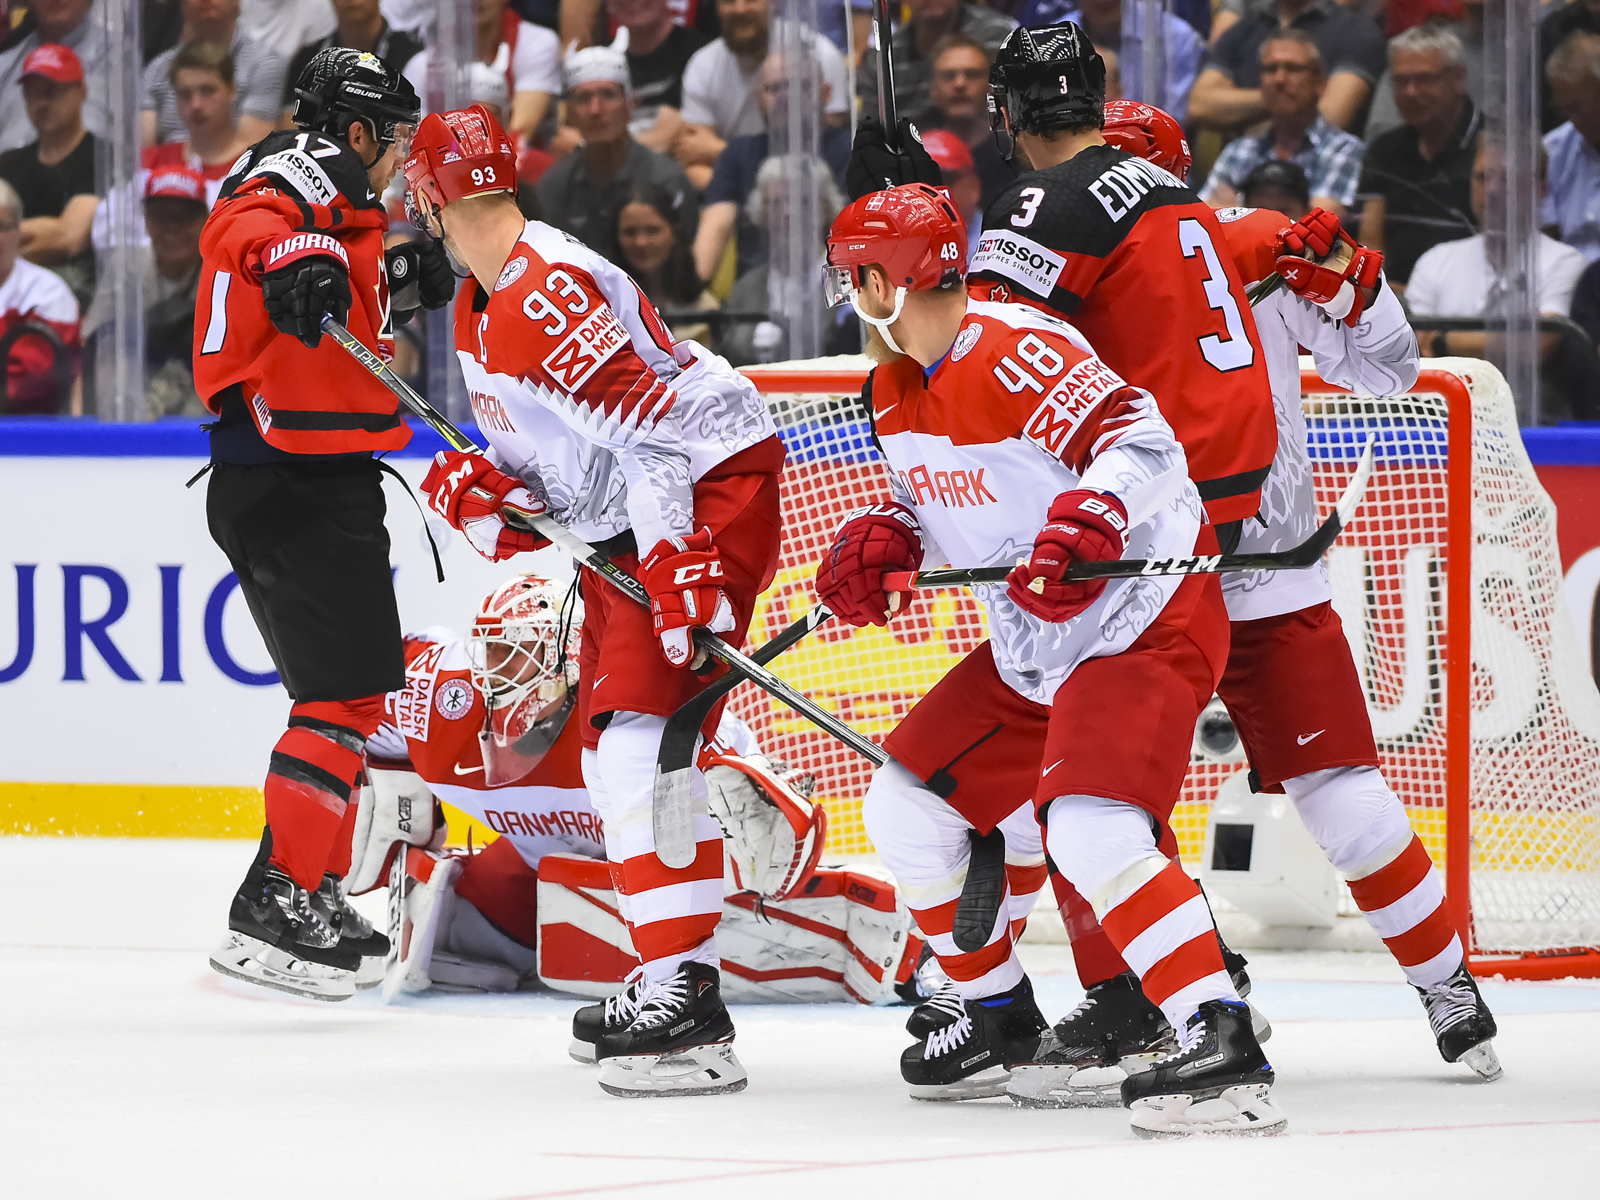 IIHF - Gallery: Canada vs. Denmark